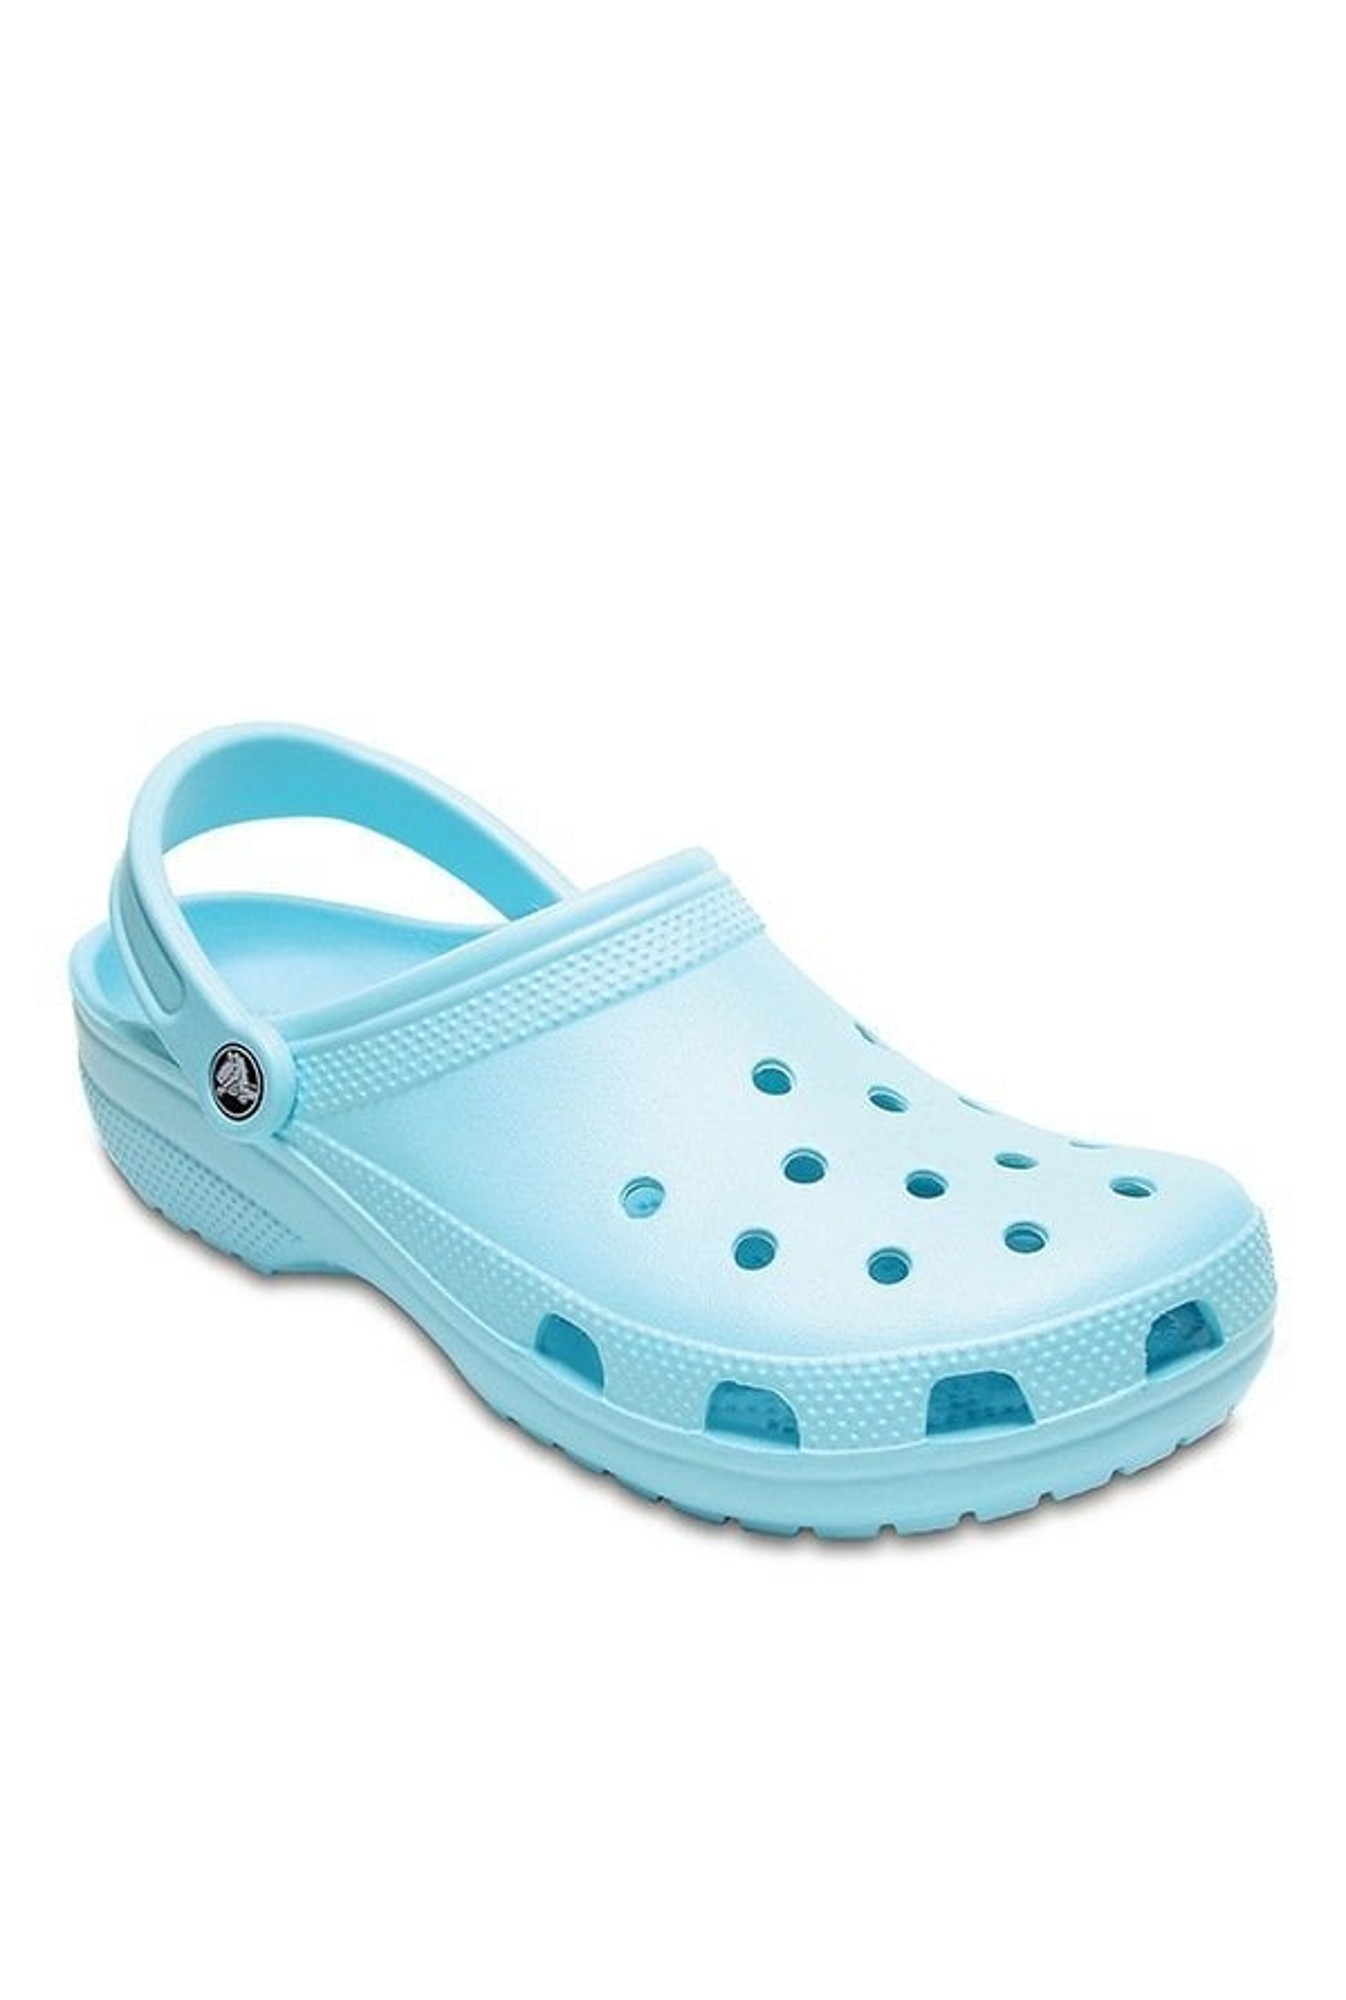 baby blue crocs mens